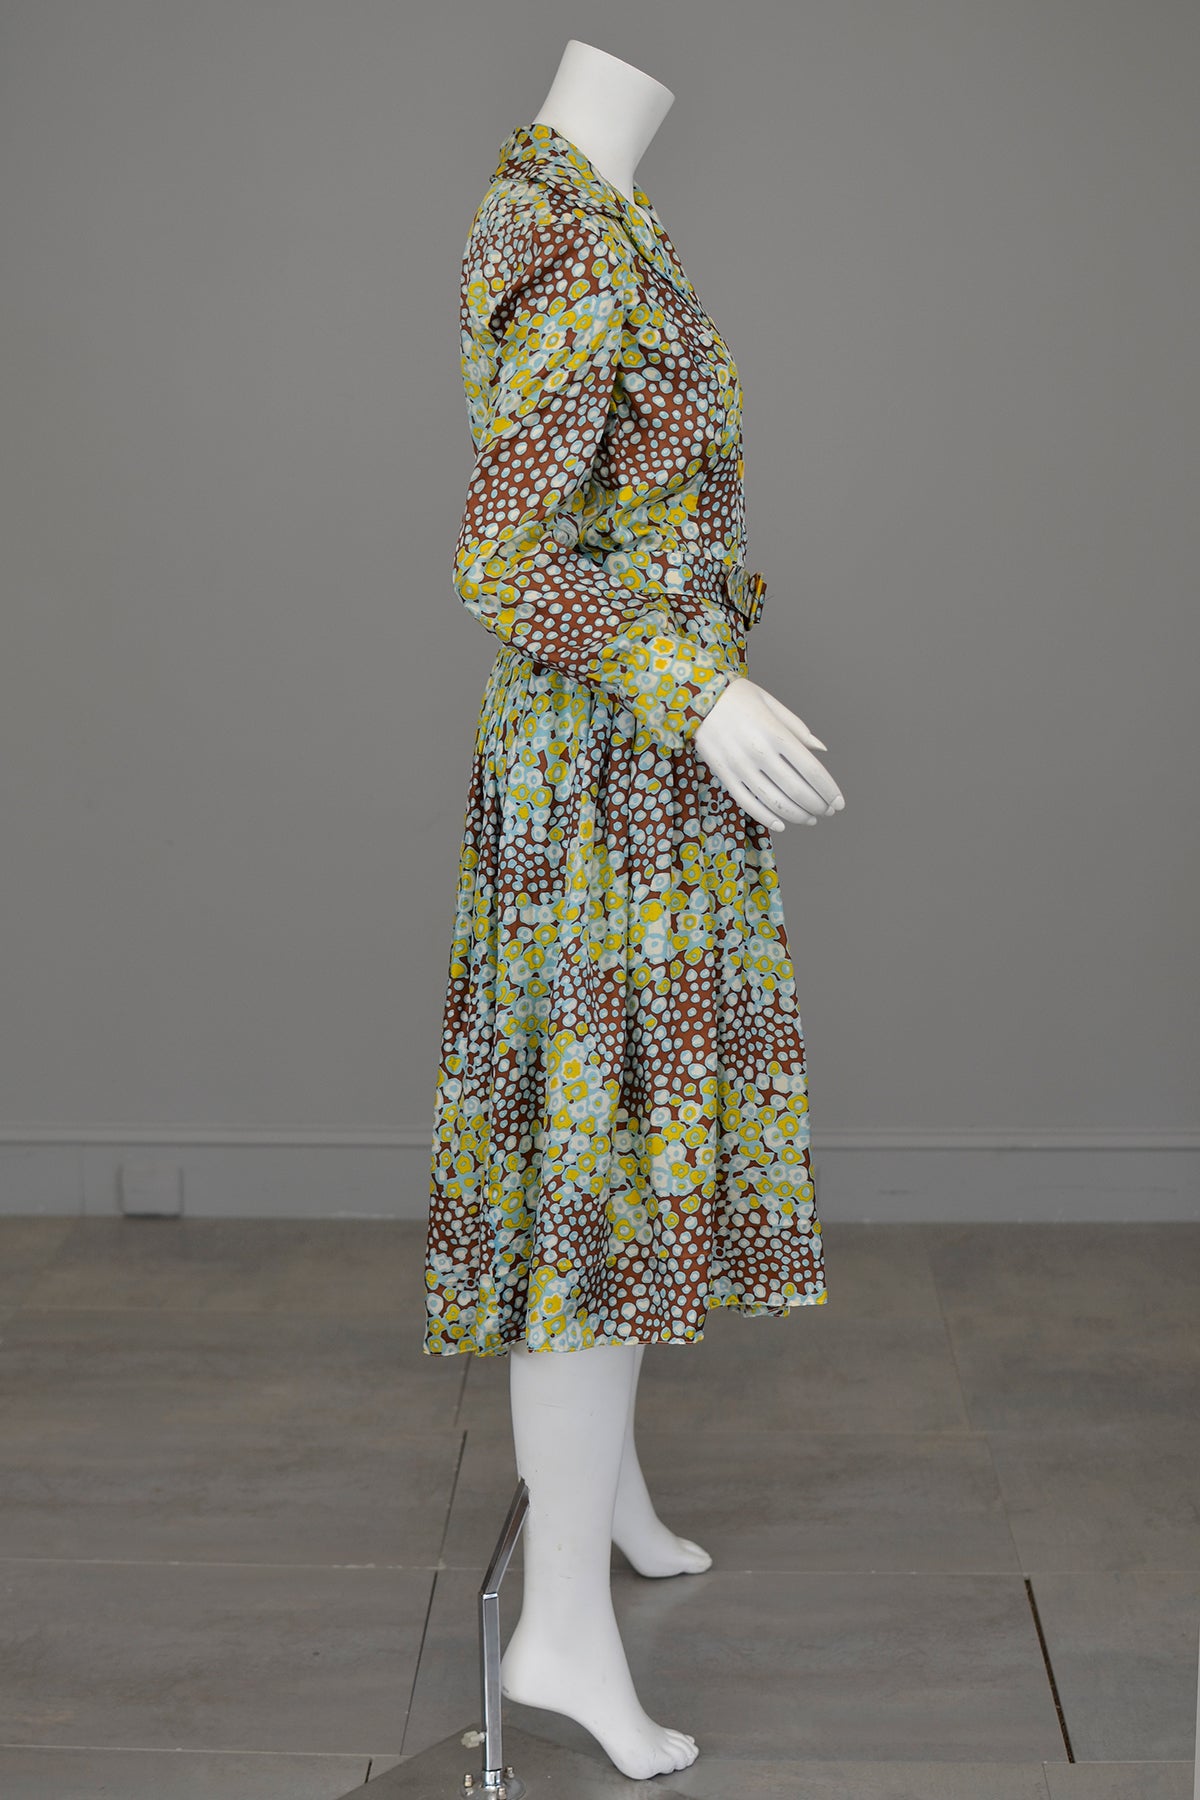 1960s Atomic Bubbles Polka Dot Novelty Print Shirtwaist Dress